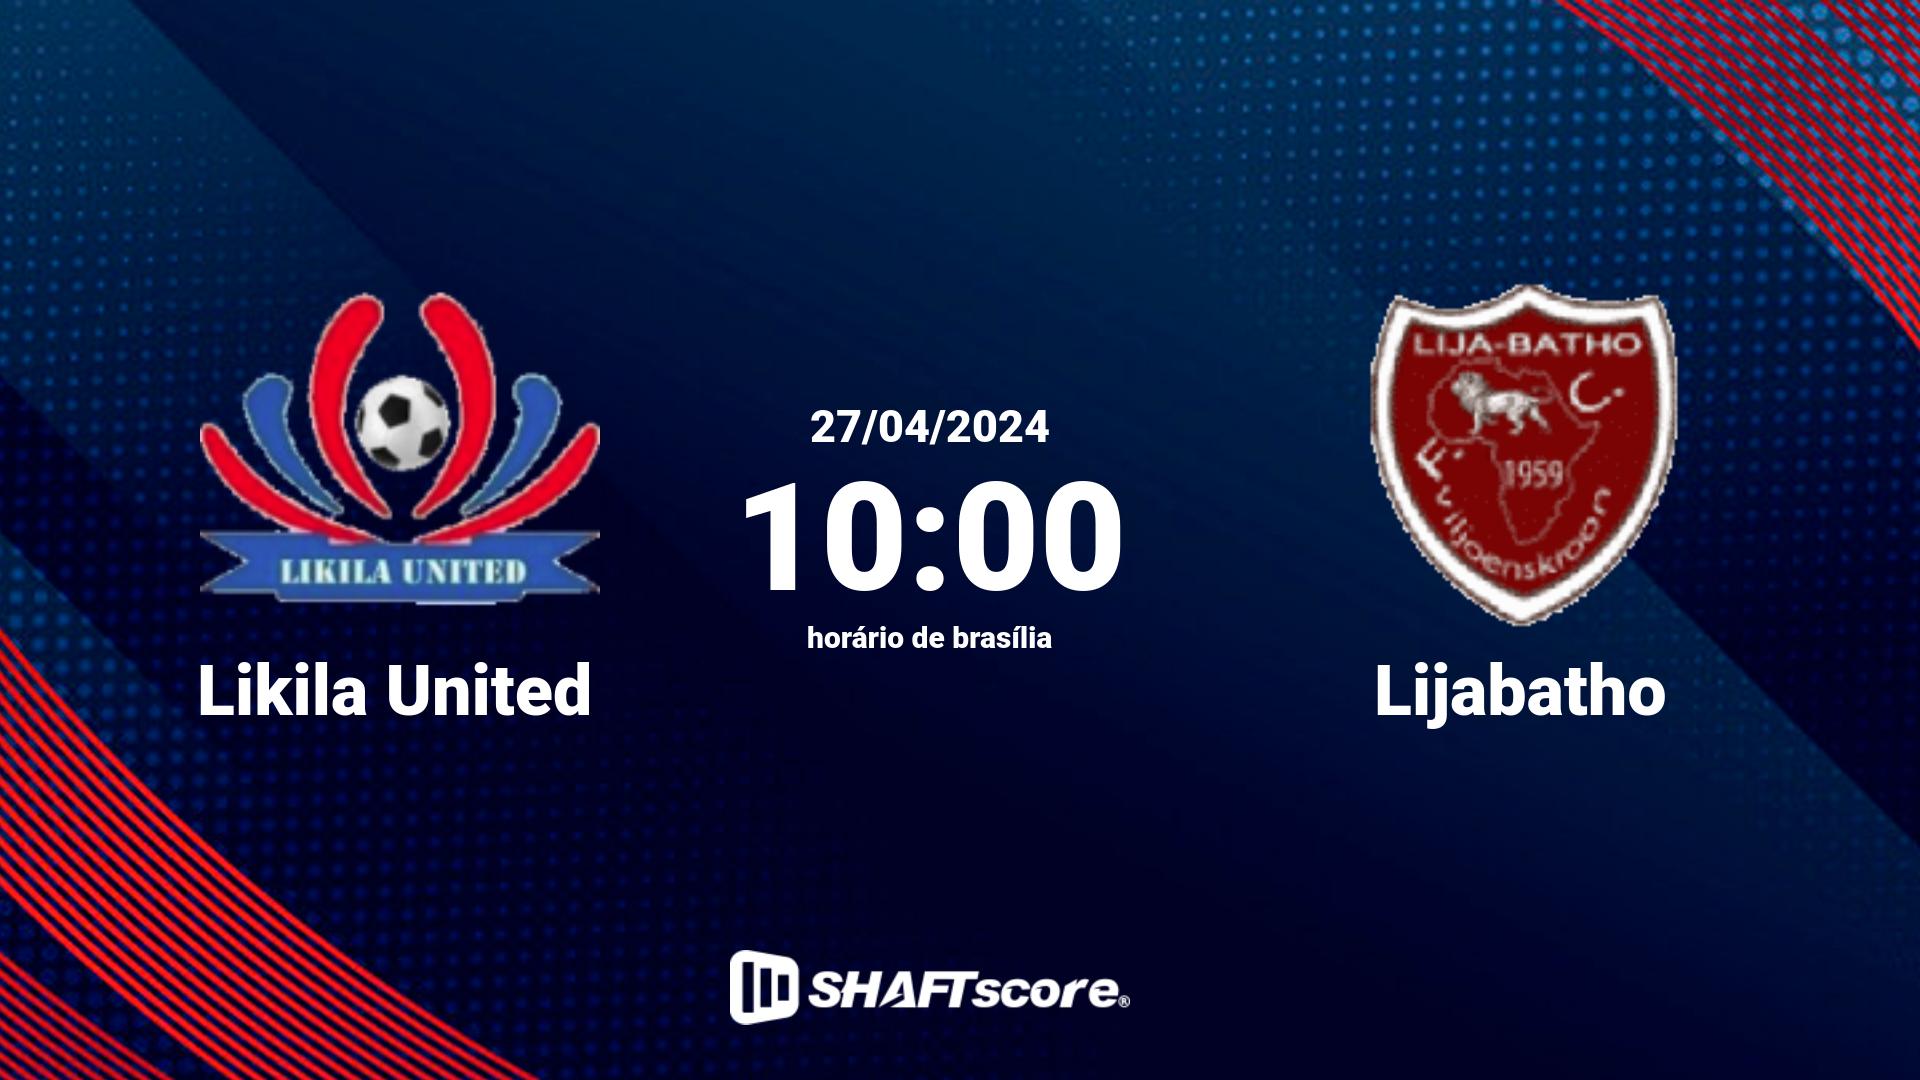 Estatísticas do jogo Likila United vs Lijabatho 27.04 10:00